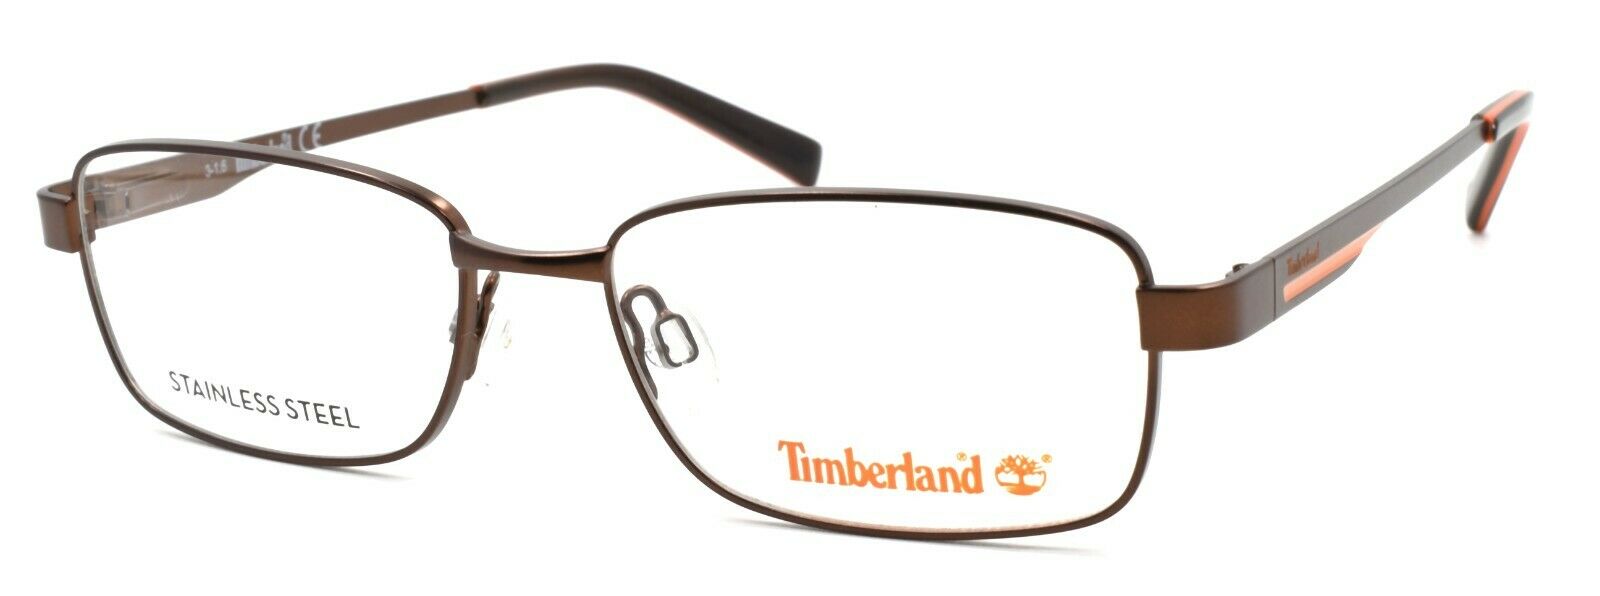 1-TIMBERLAND TB5064 049 Kids Eyeglasses Frames 49-15-135 Matte Dark Brown-664689821778-IKSpecs